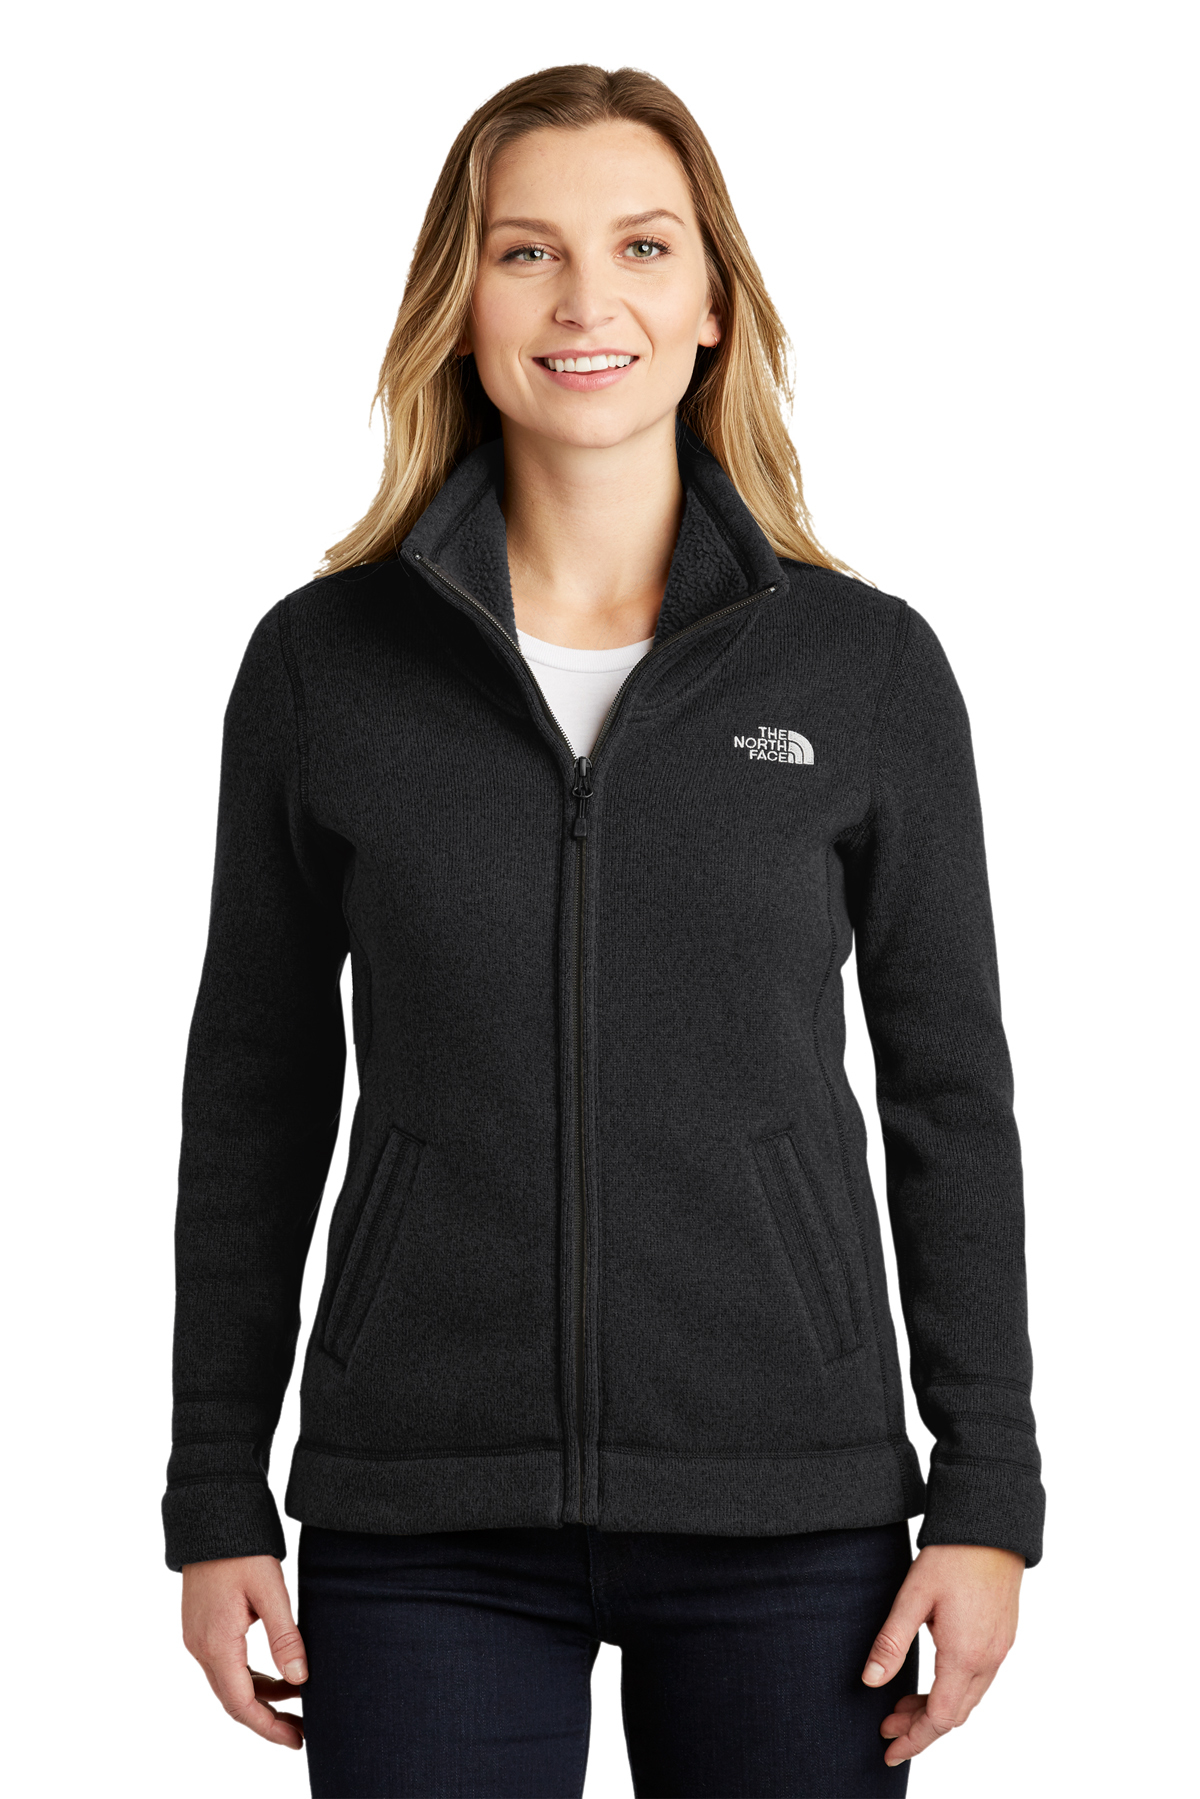 discount 72% WOMEN FASHION Jumpers & Sweatshirts Fleece Gray/Black L Amazon sweatshirt 